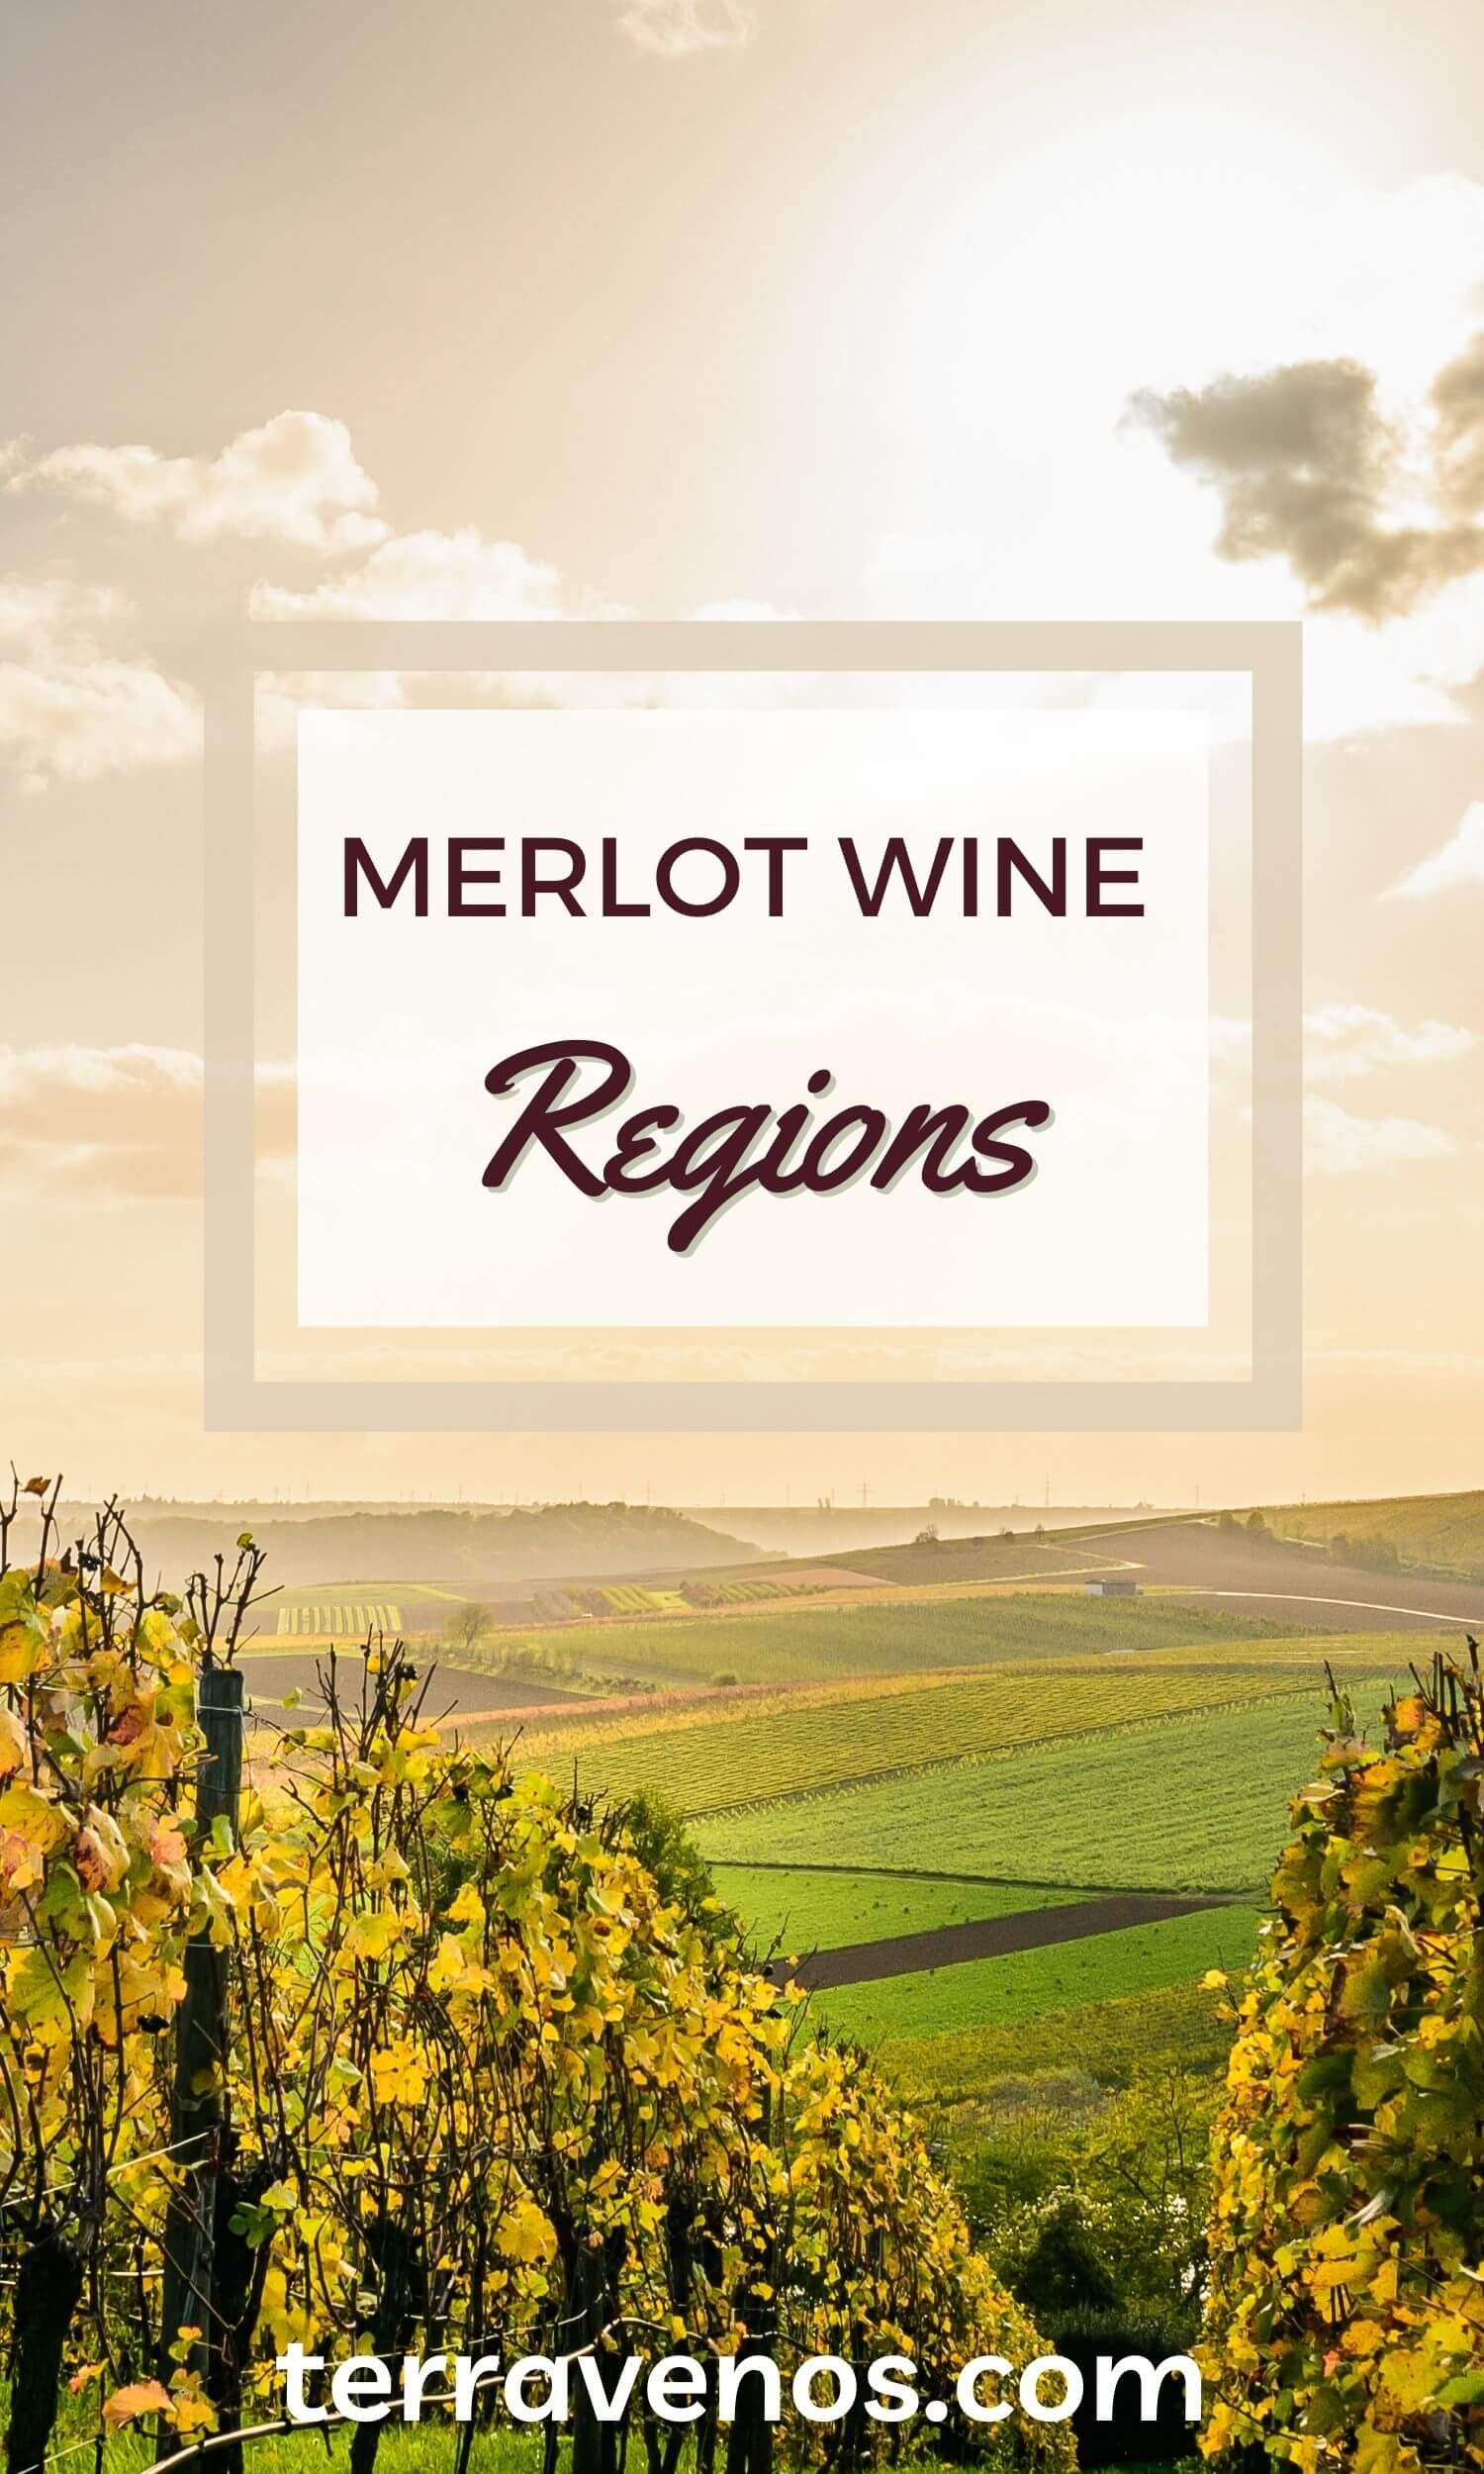 Merlot Wine Regions: Why It’s So Darn Delicious